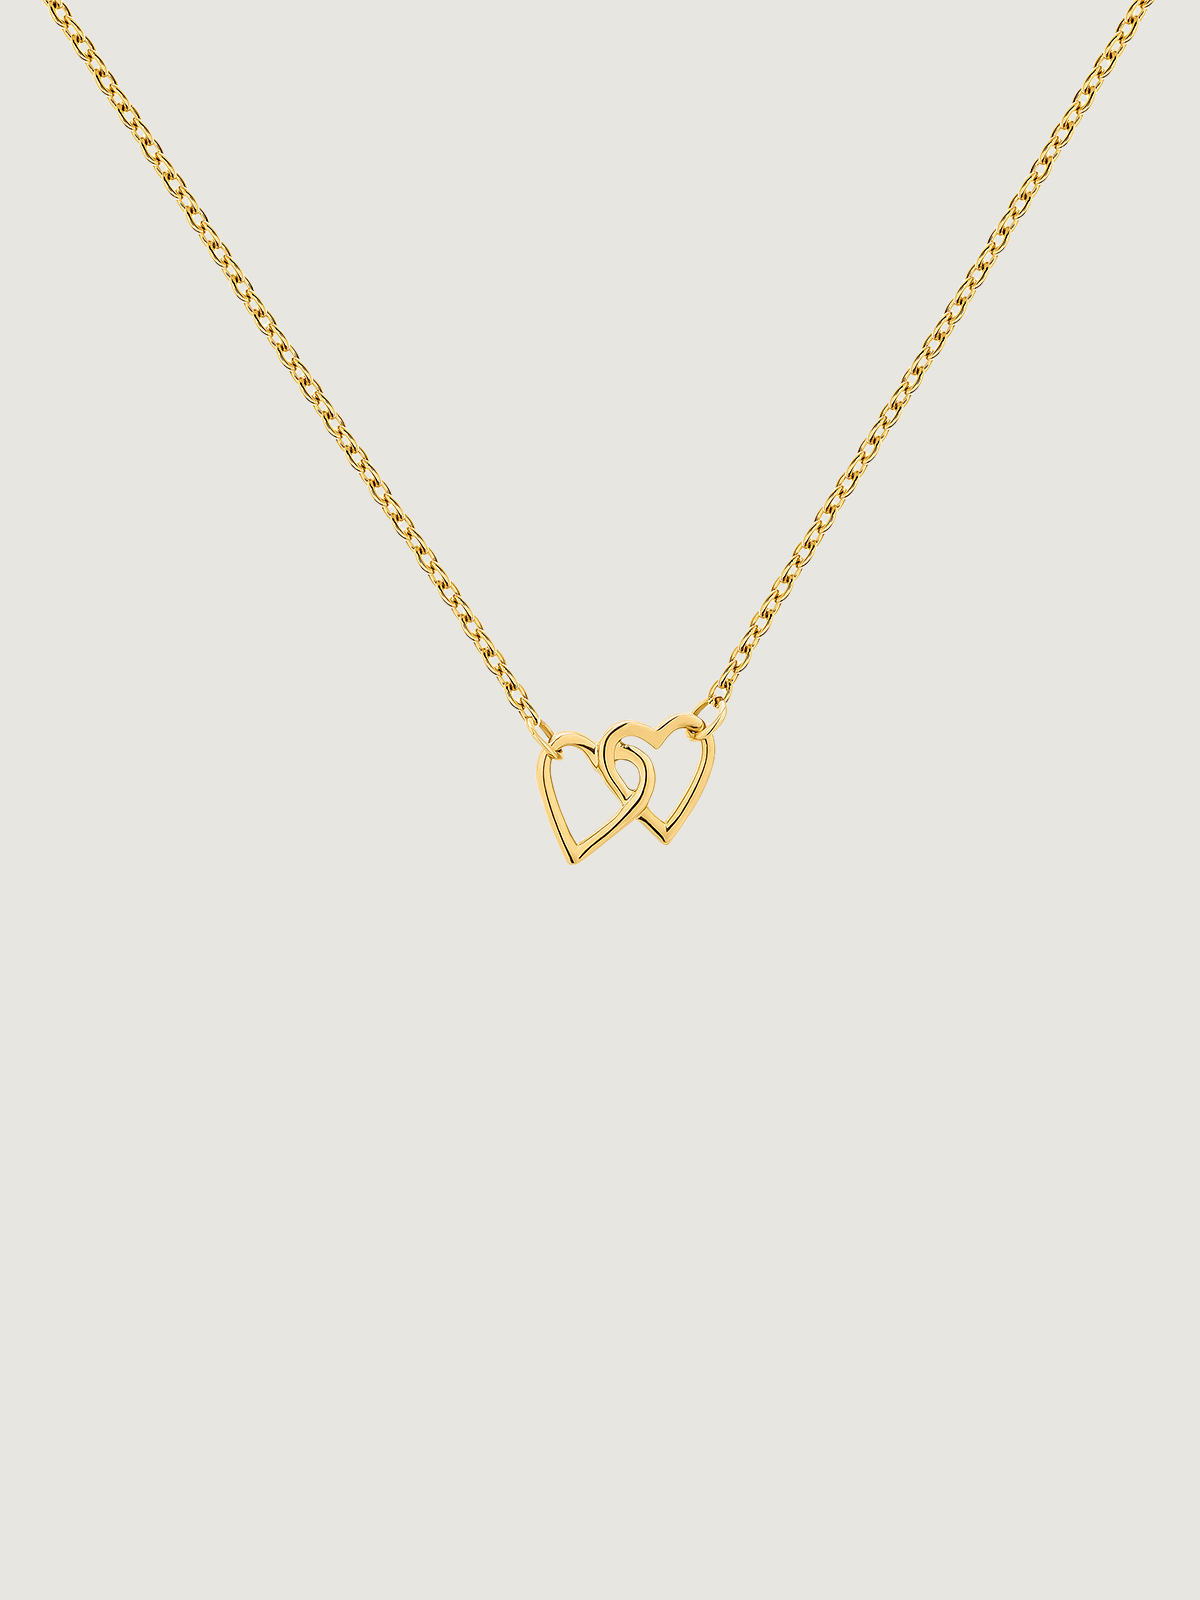 9K yellow gold pendant with interlocking hearts